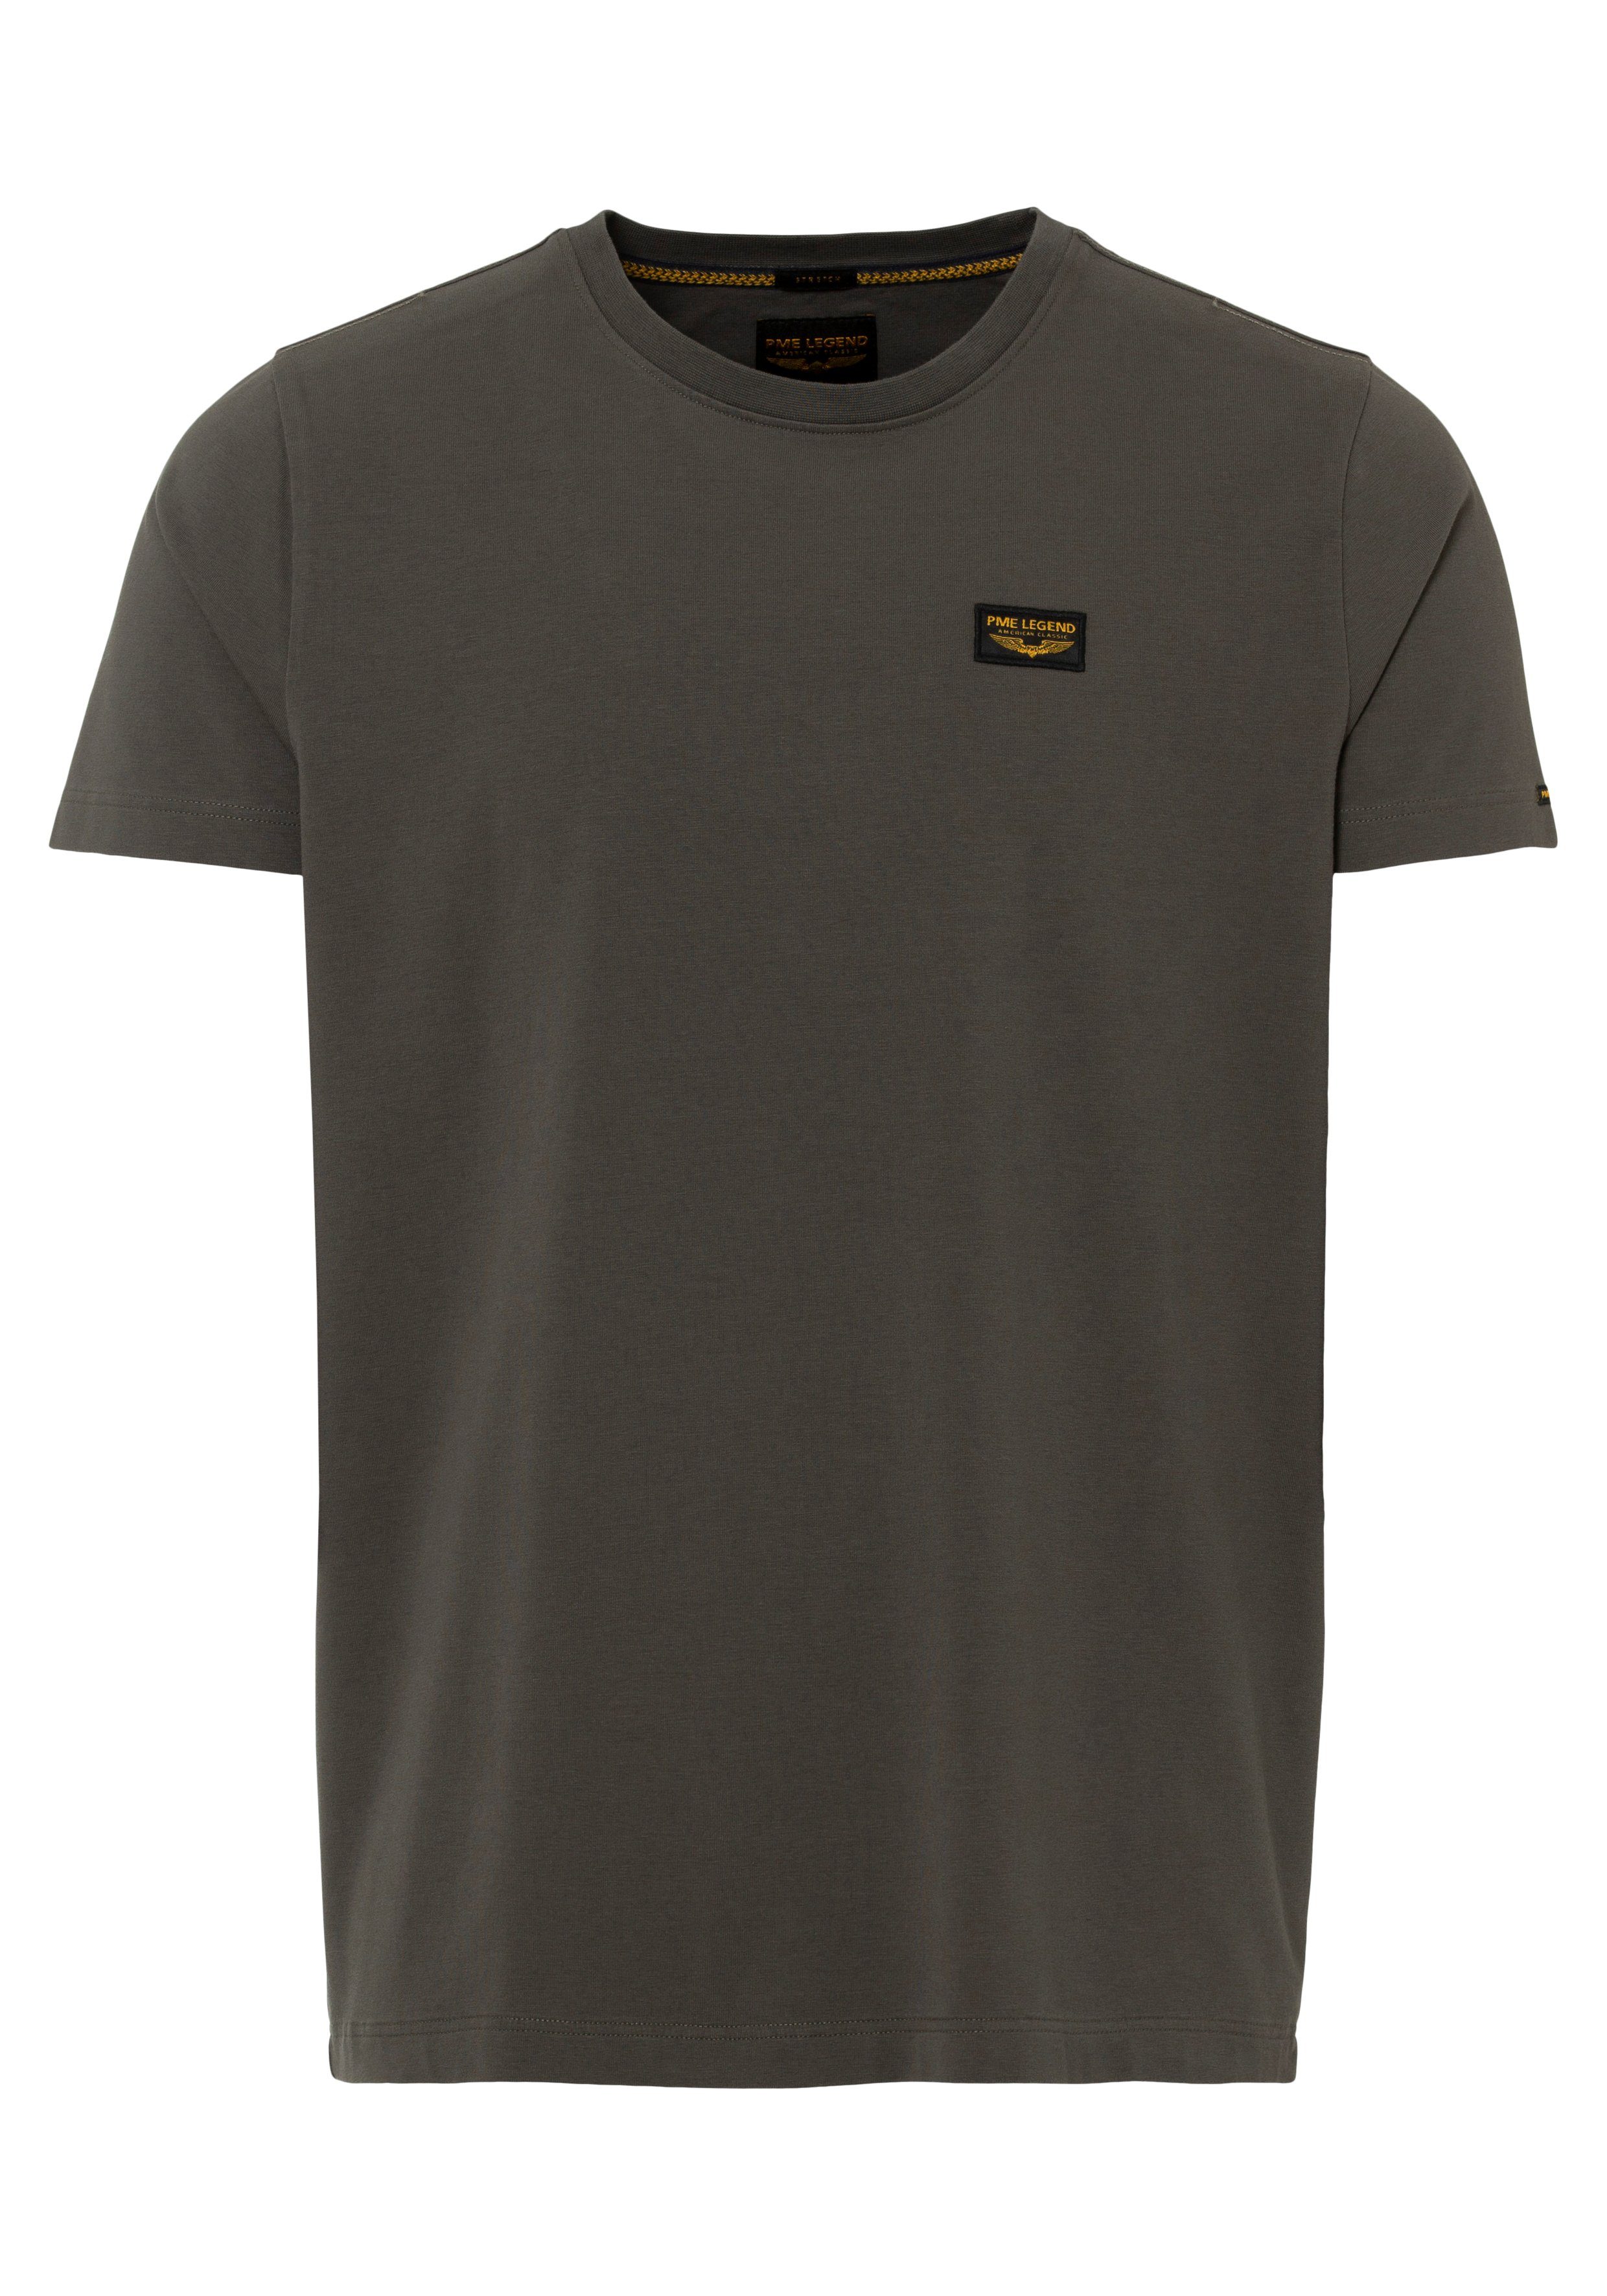 PME LEGEND T-Shirt mit Logobadge grau